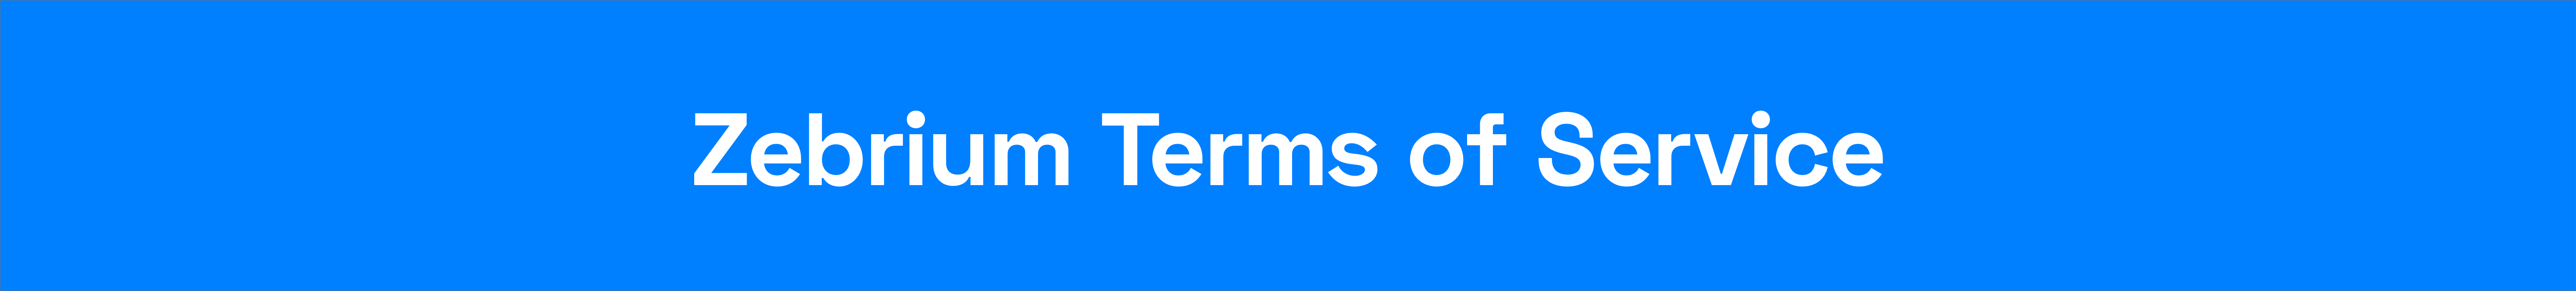 zebrium terms of service